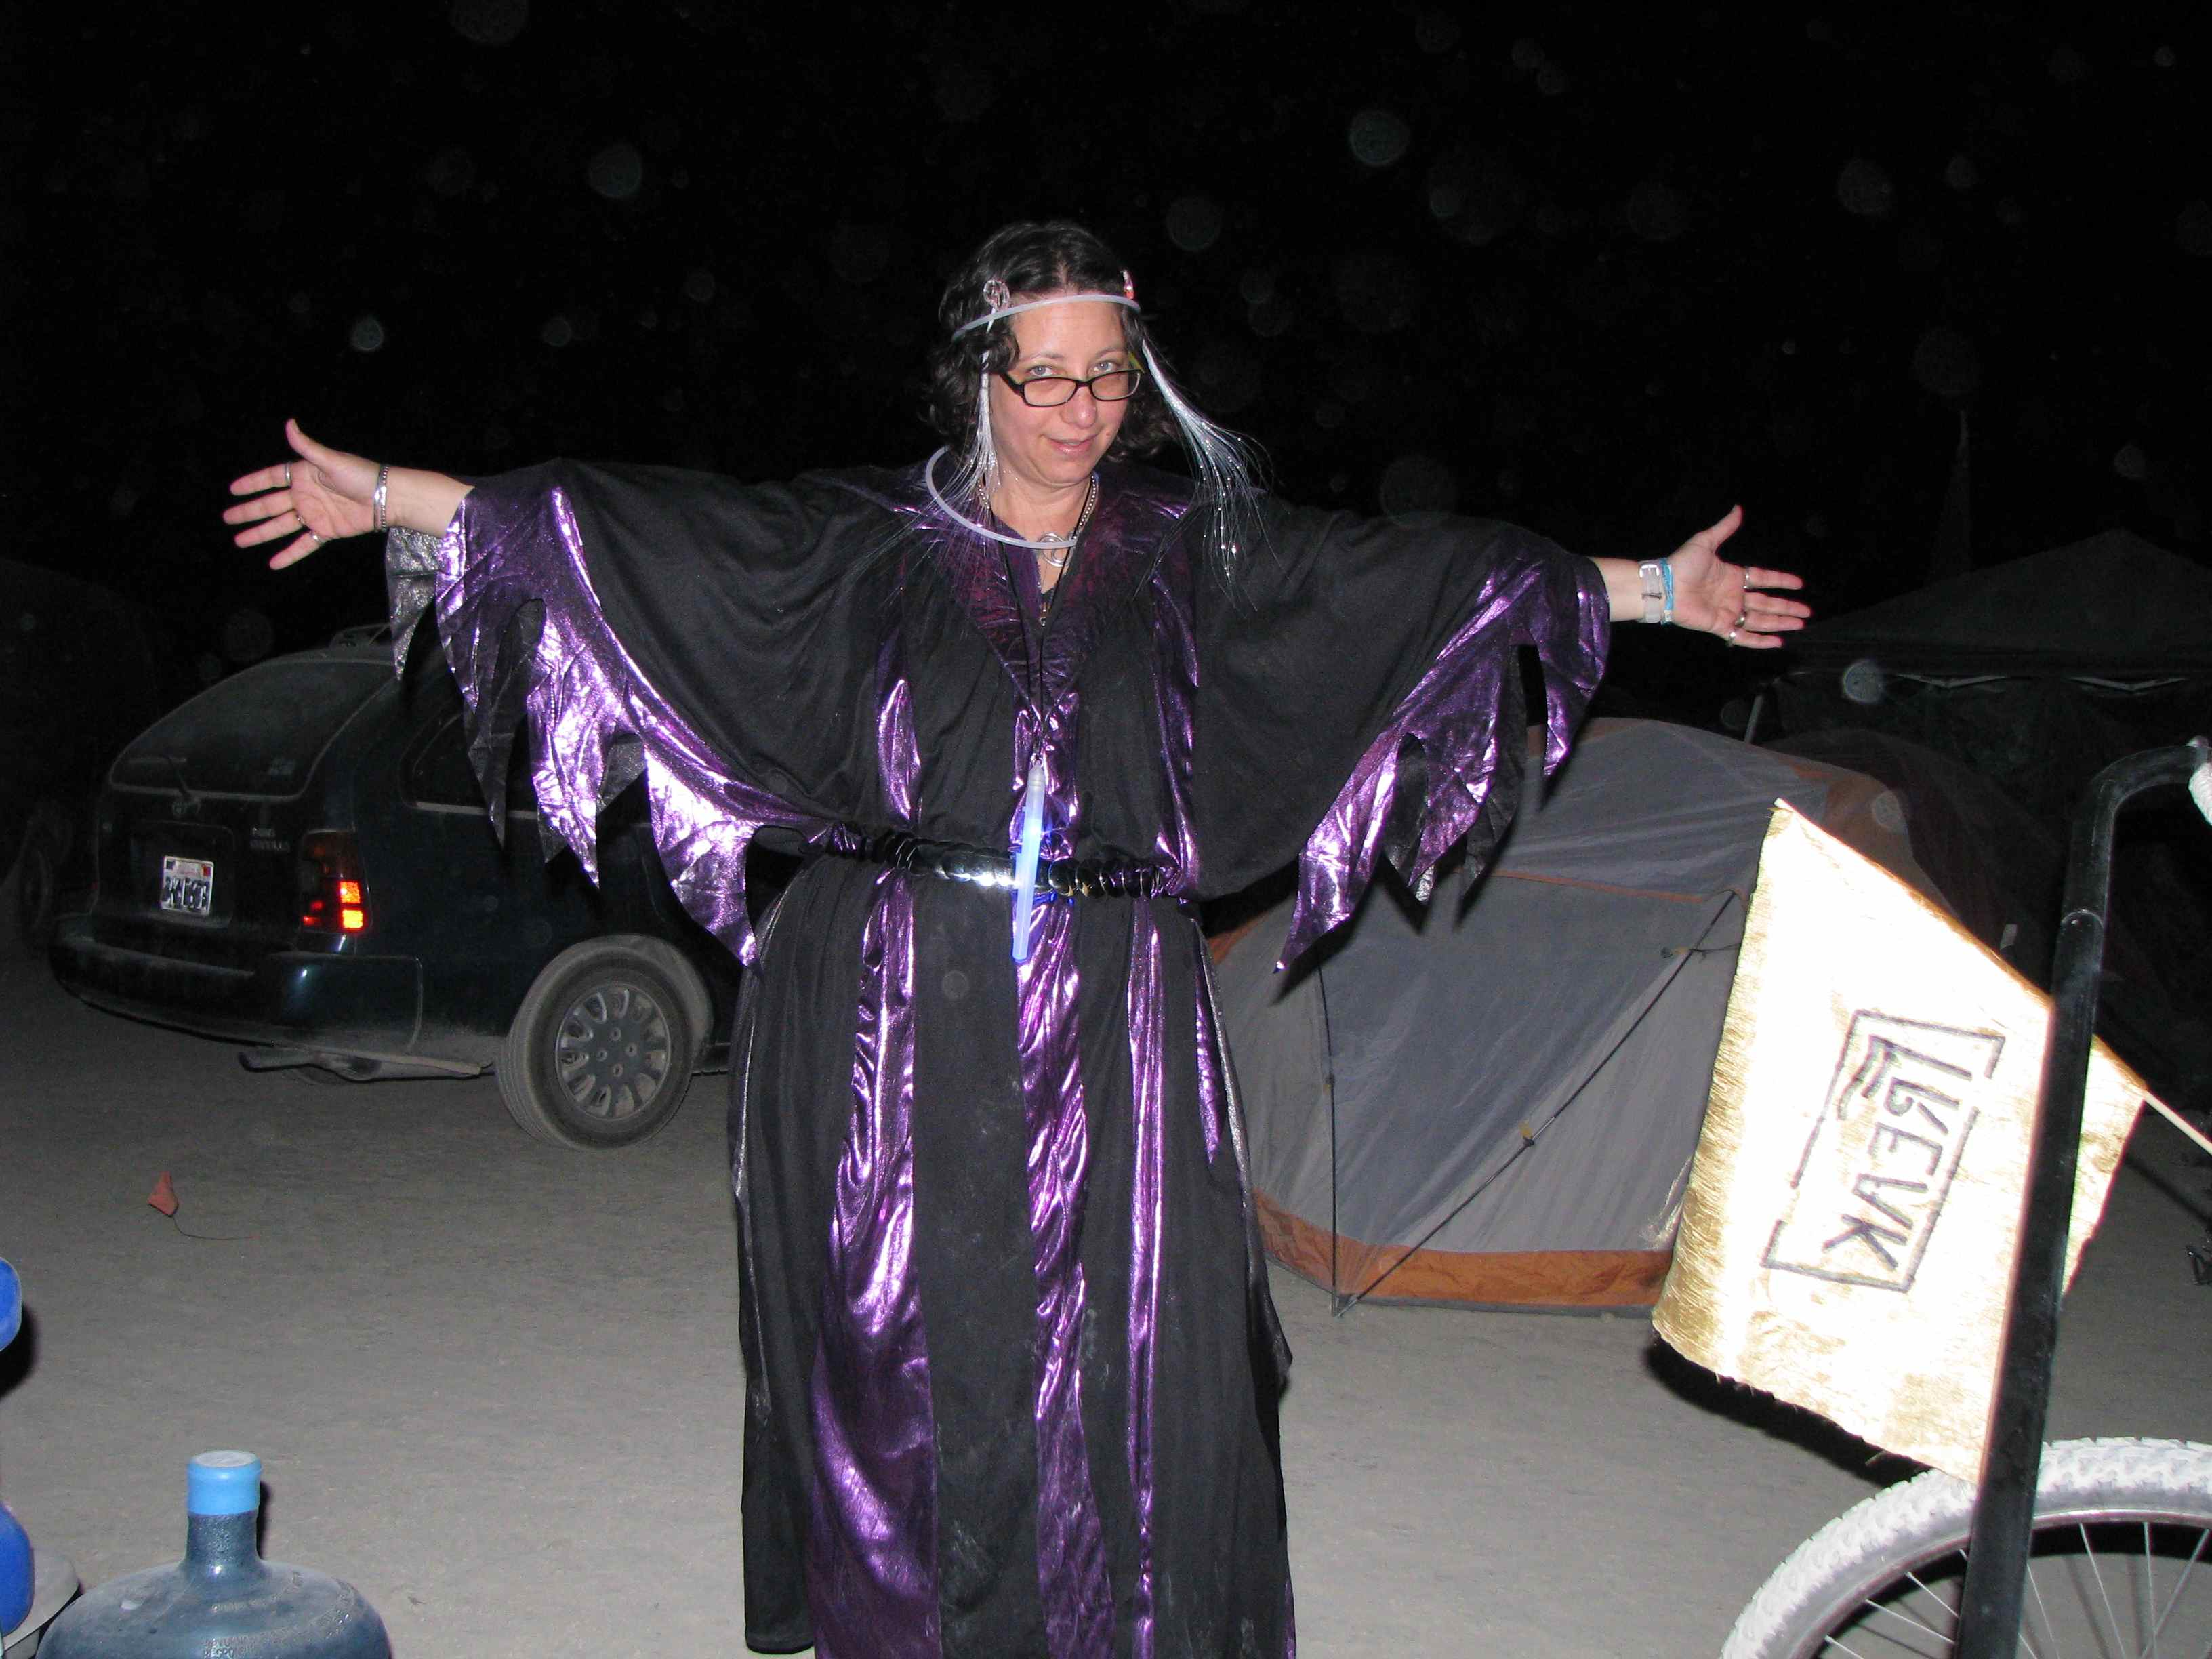 Me as a purple wizard-Burning Man 2011